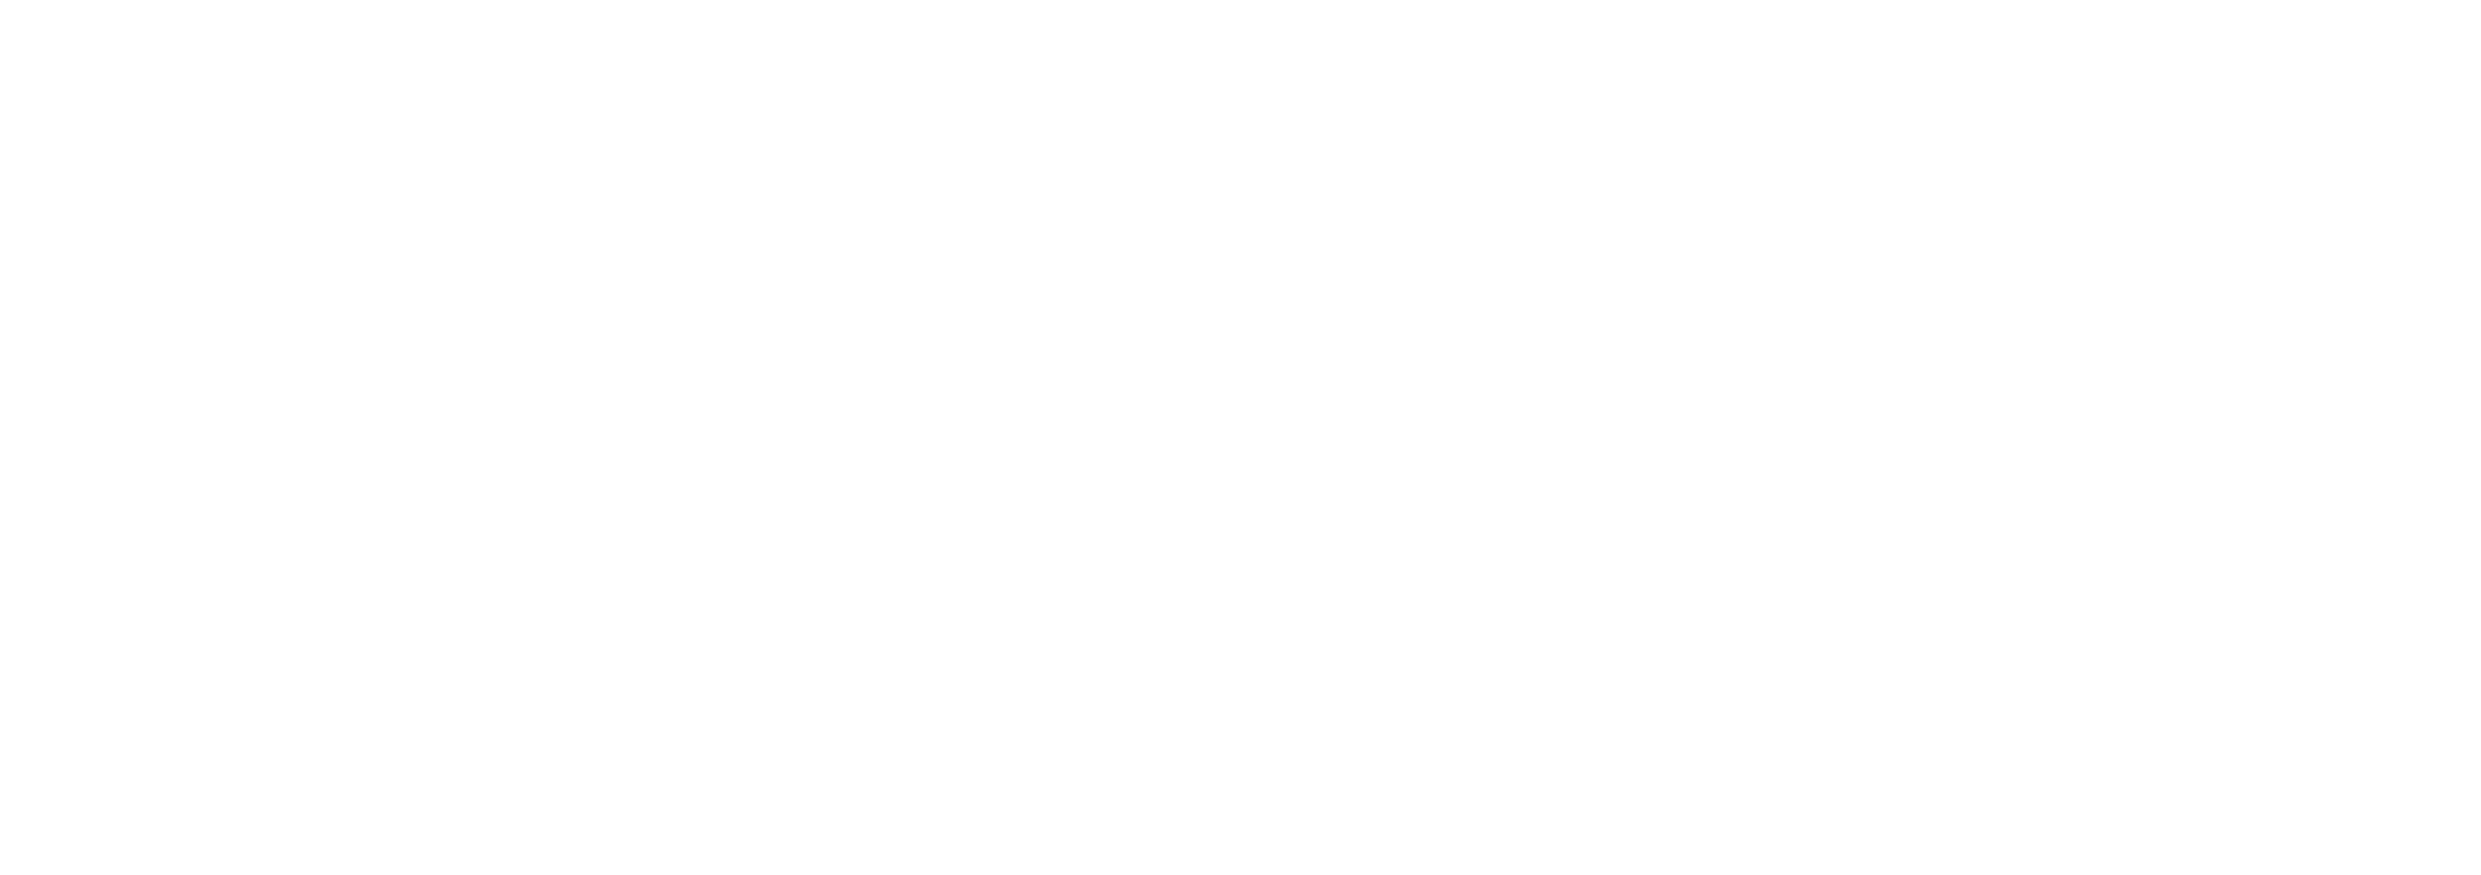 Twinify Technologies